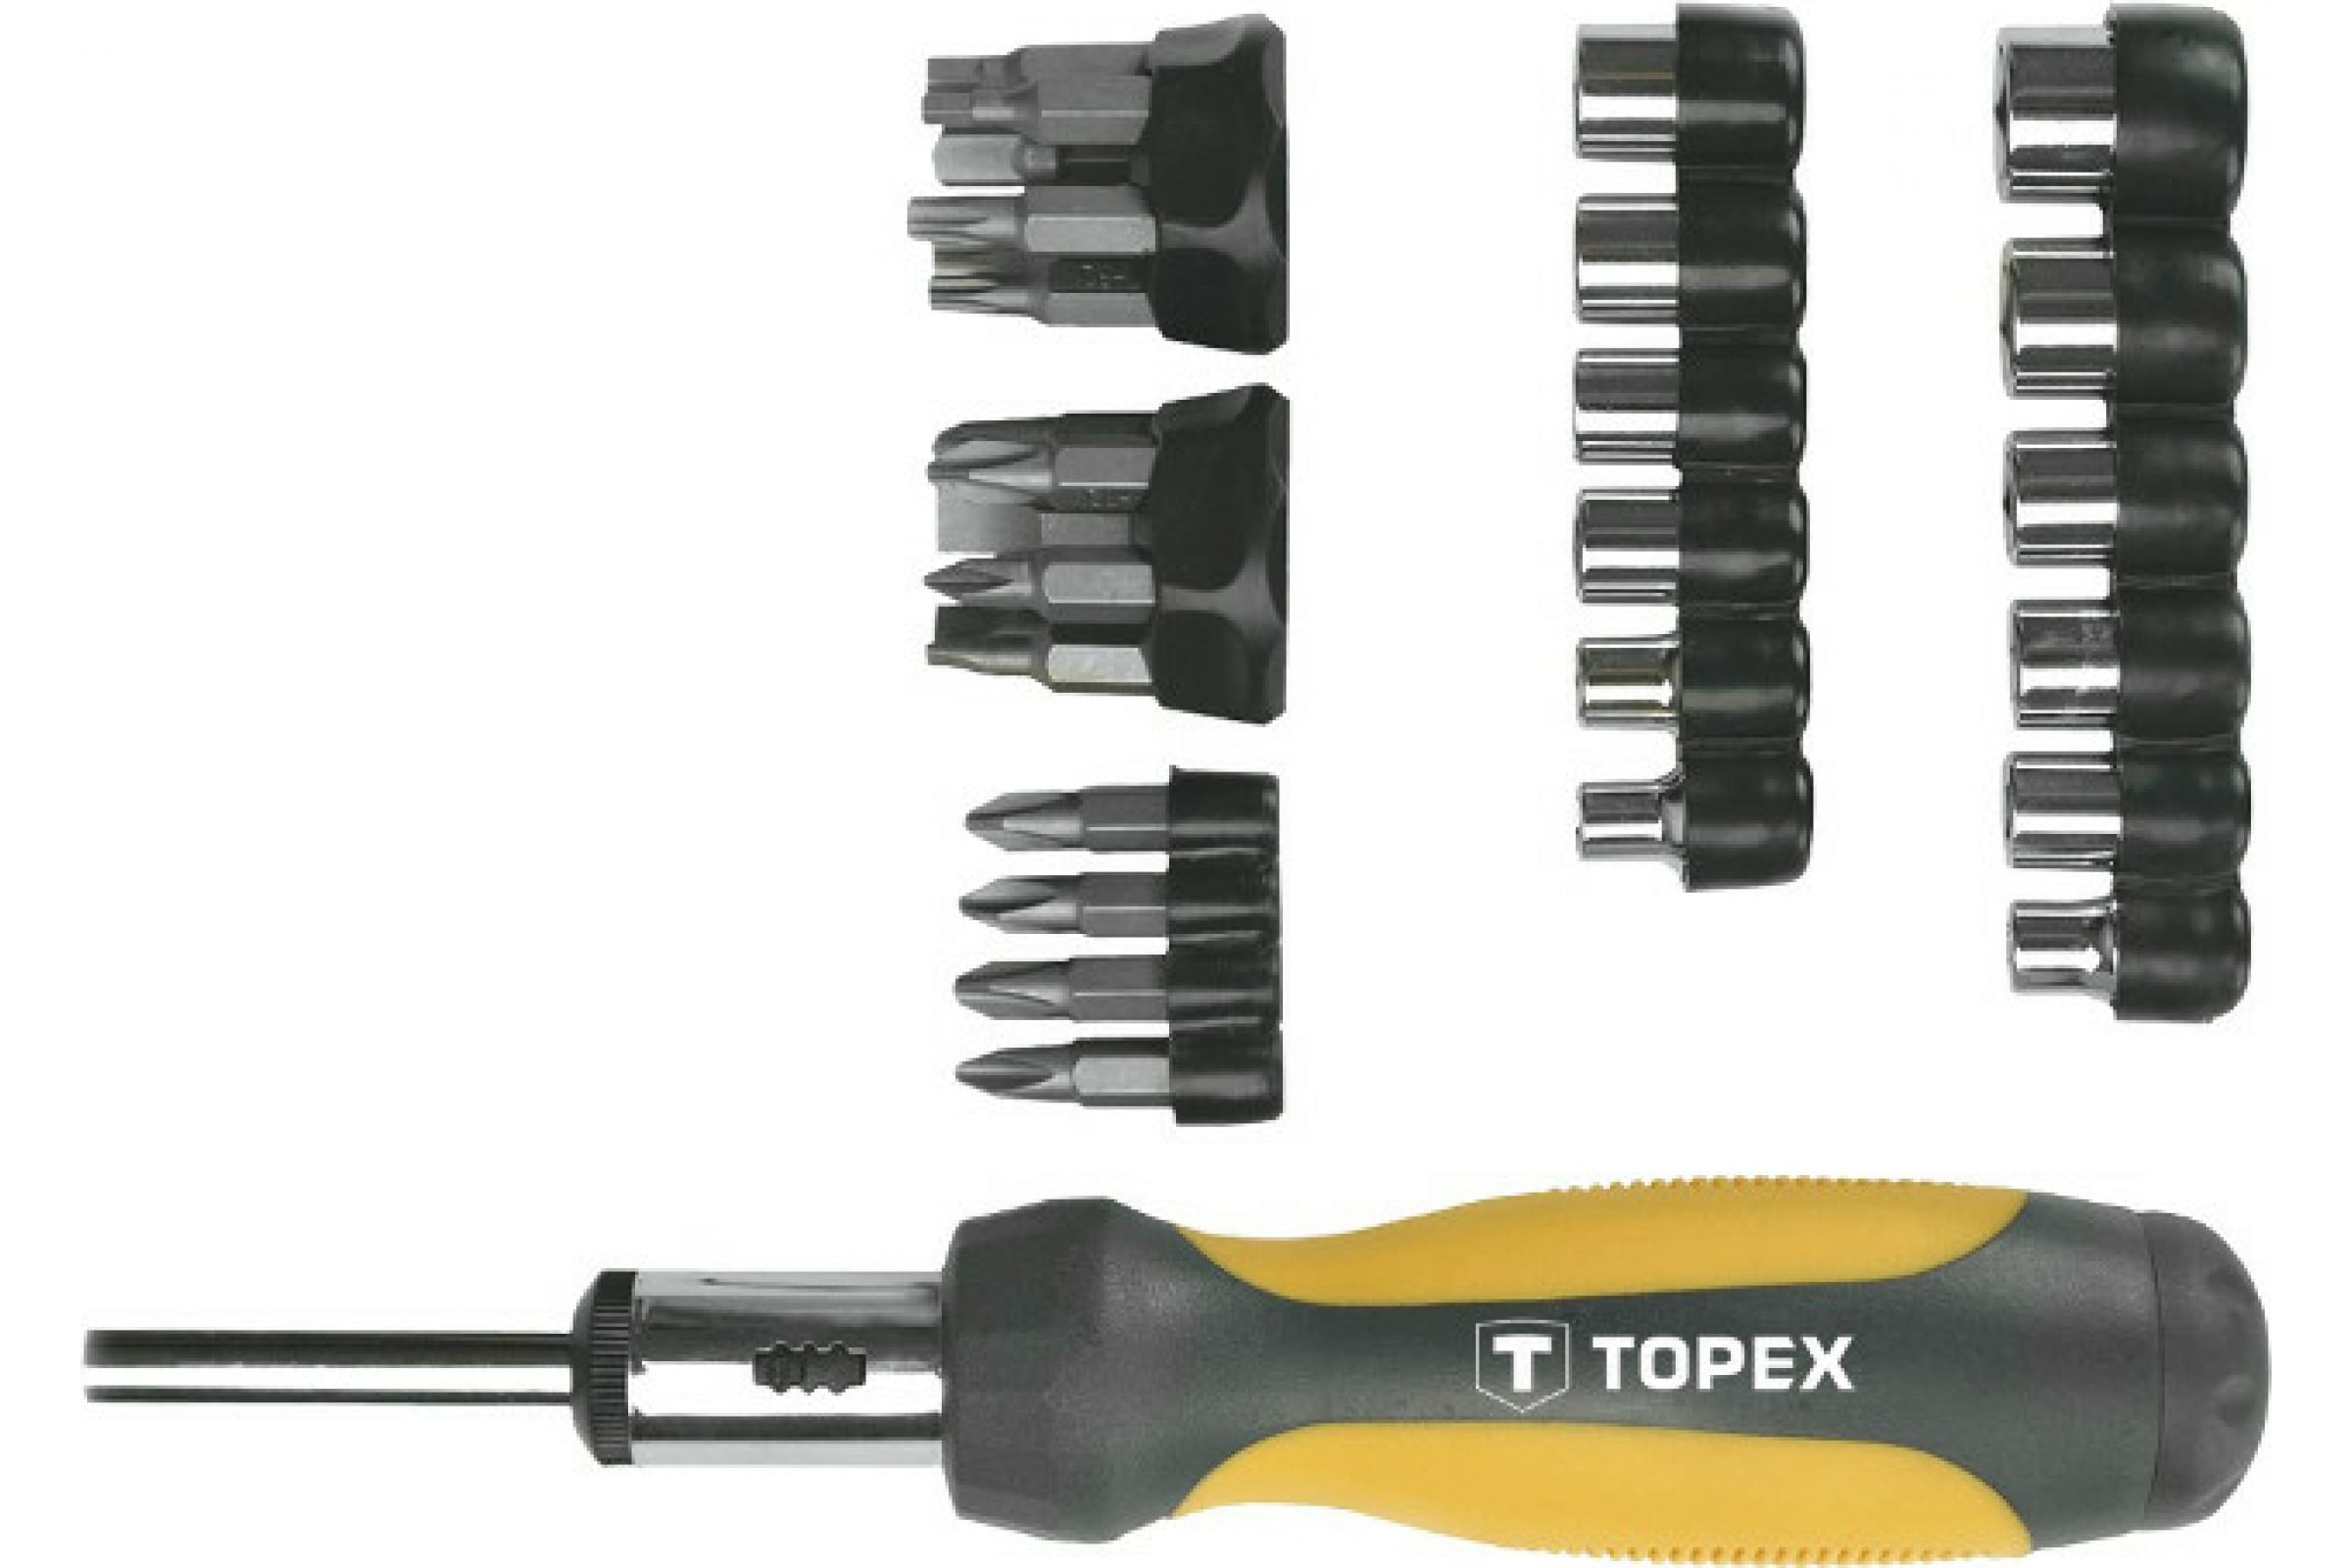 TOPEX Сменные наконечники и головки с рукояткой, набор 29 шт. 39D356 сменные наконечники topex